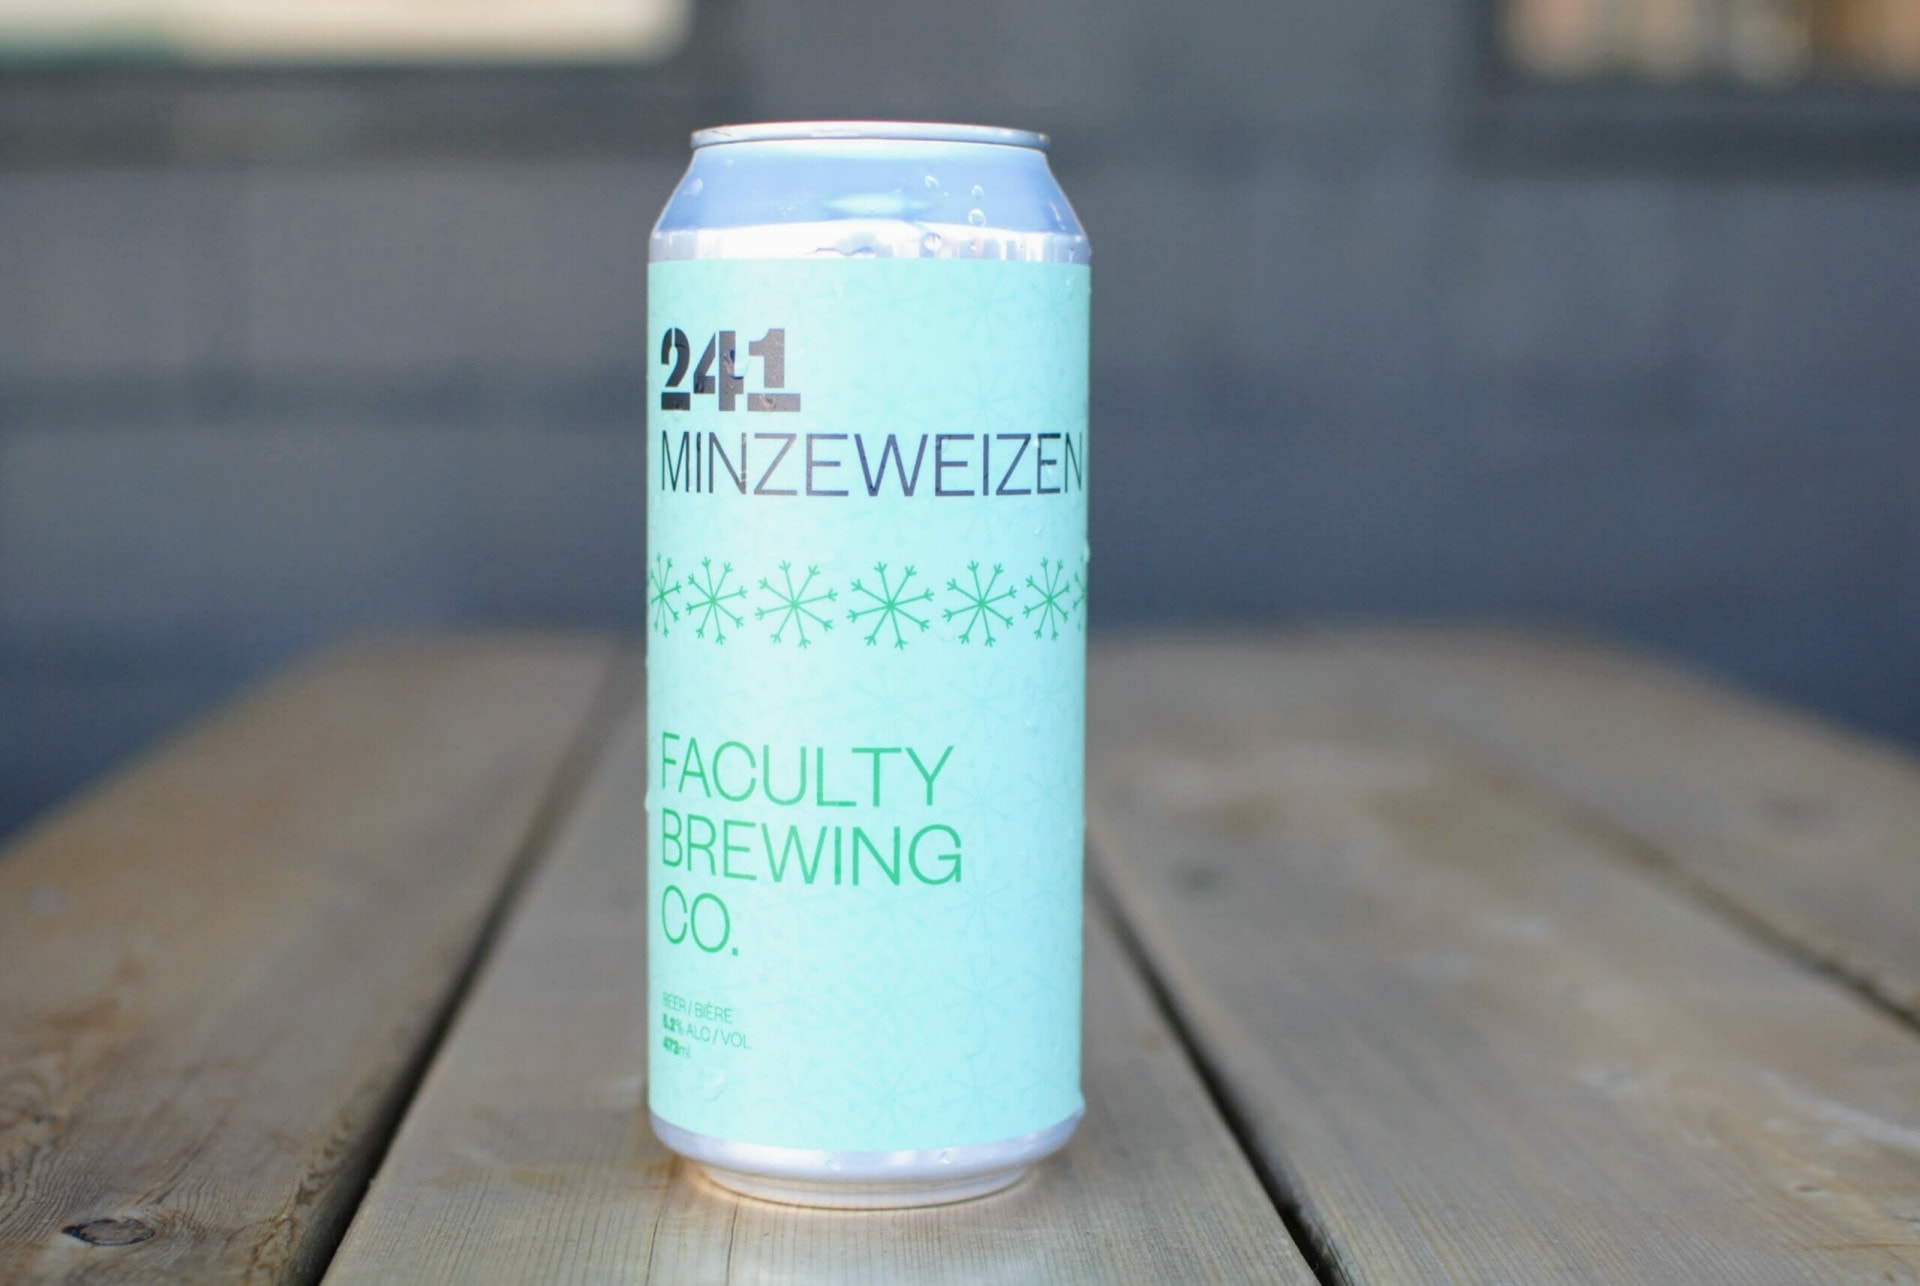 241 Minzeweizen - Faculty Brewing